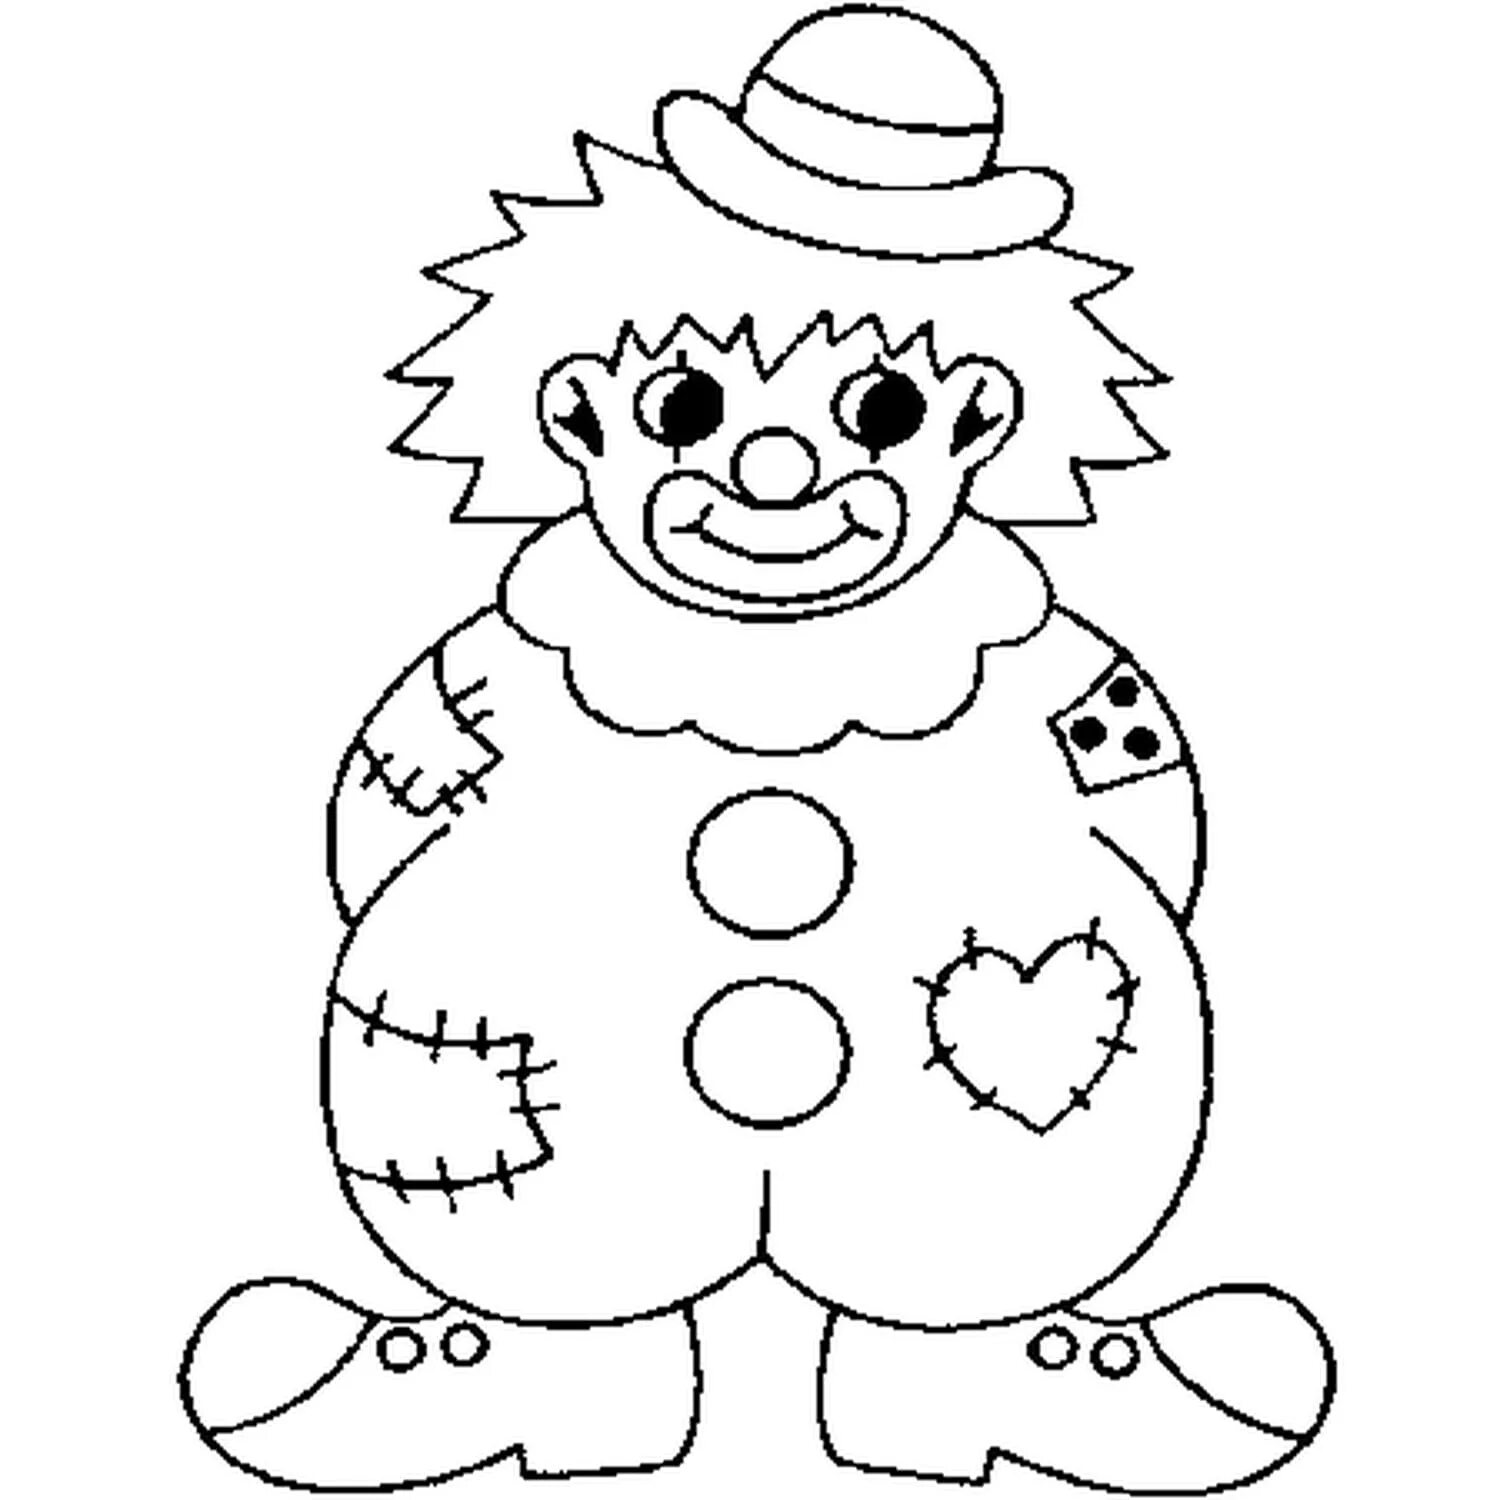 Раскраска клоун для детей 3 4 лет. Клоун раскраска. Клоун раскраска для малышей. Клоун раскраска для детей. Раскраска весёлый клоун для детей.